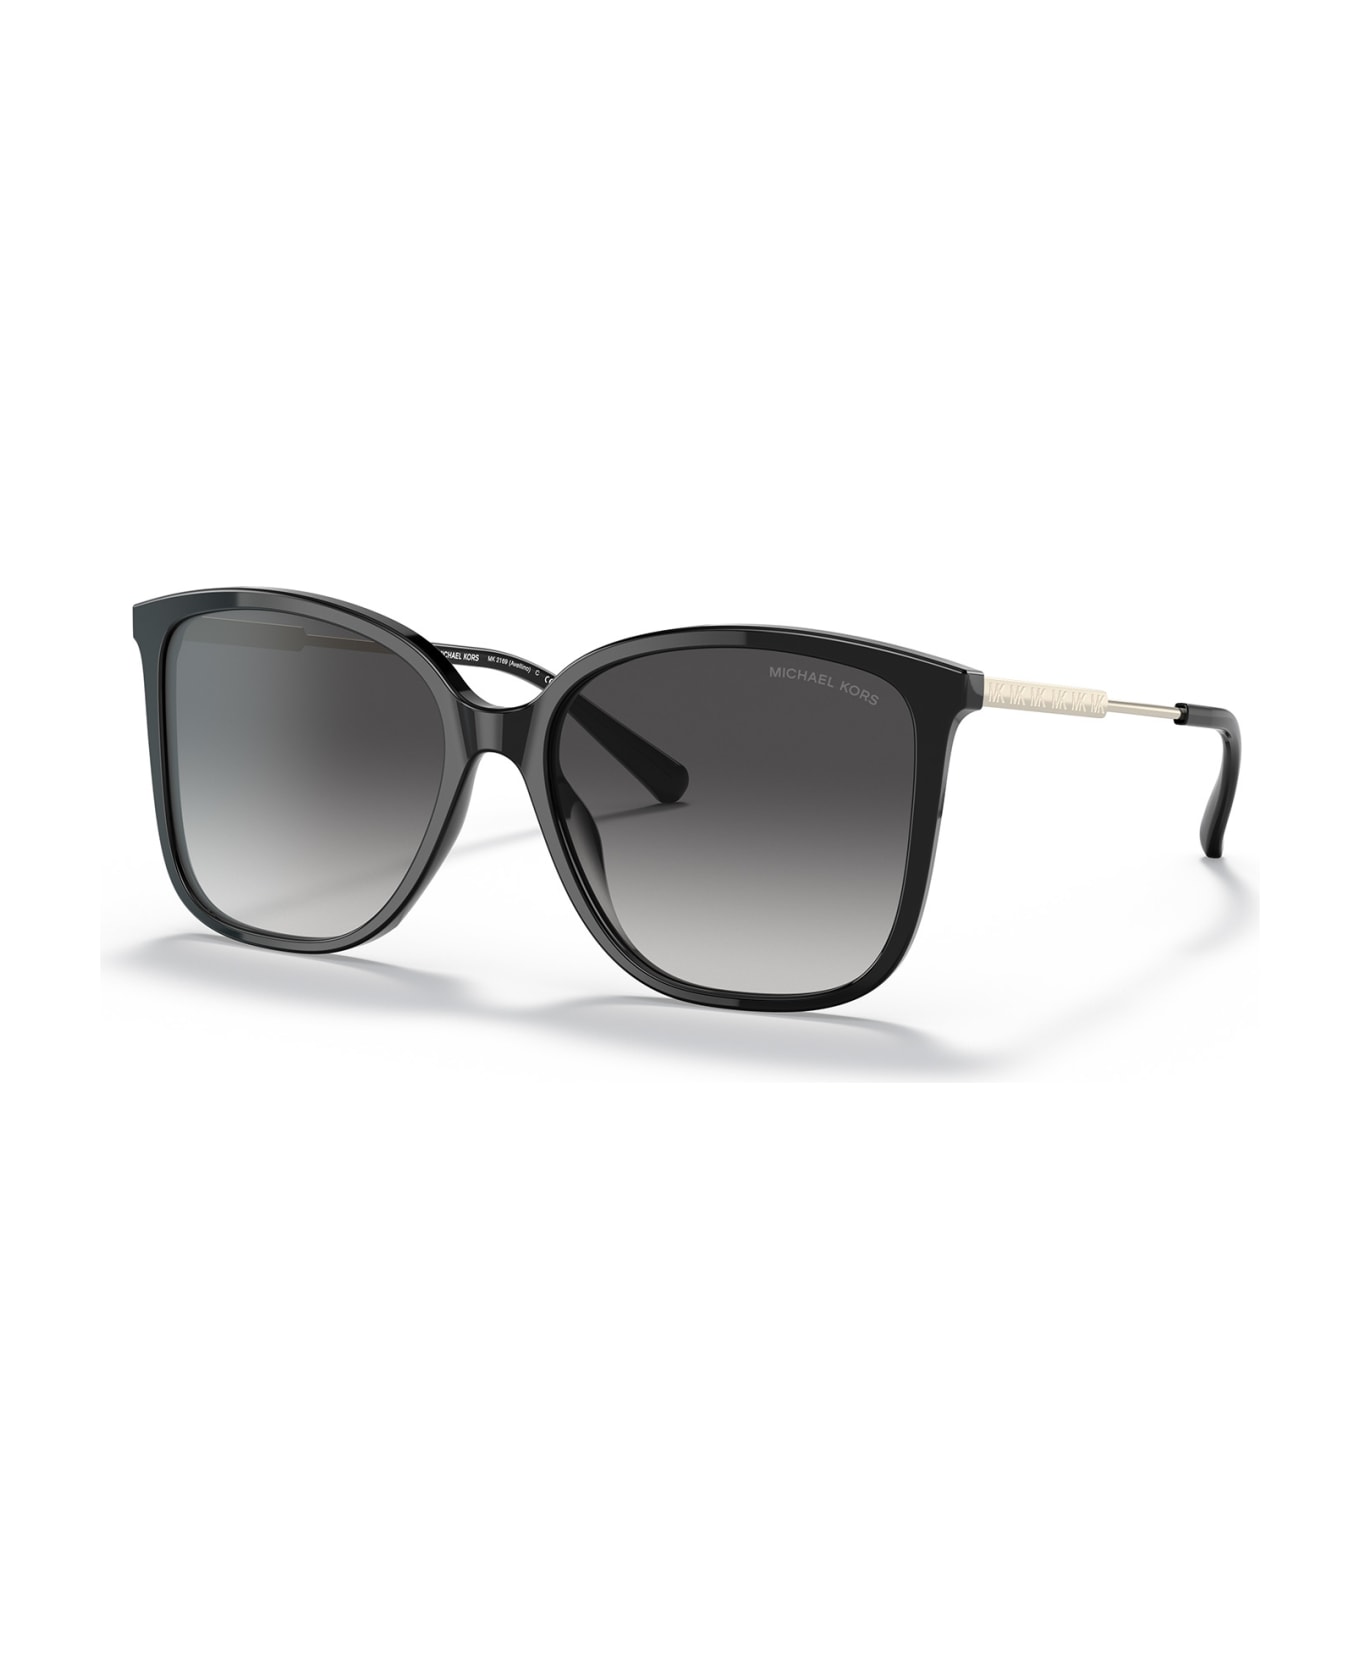 Michael Kors Mk2169 Black Sunglasses - Black